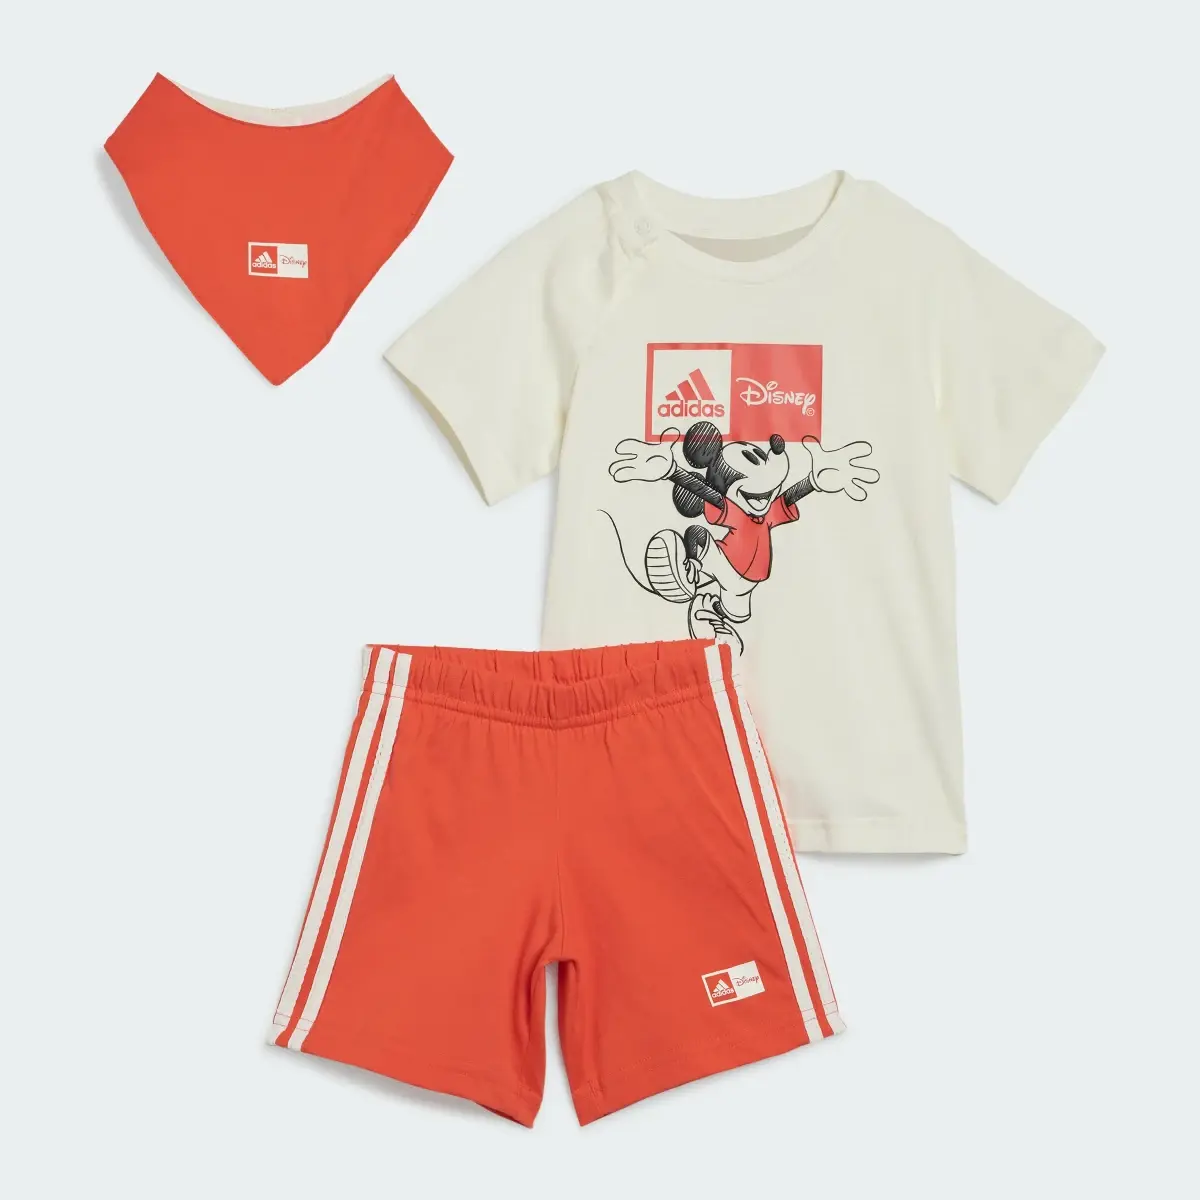 Adidas x Disney Mickey Mouse Gift Set. 2